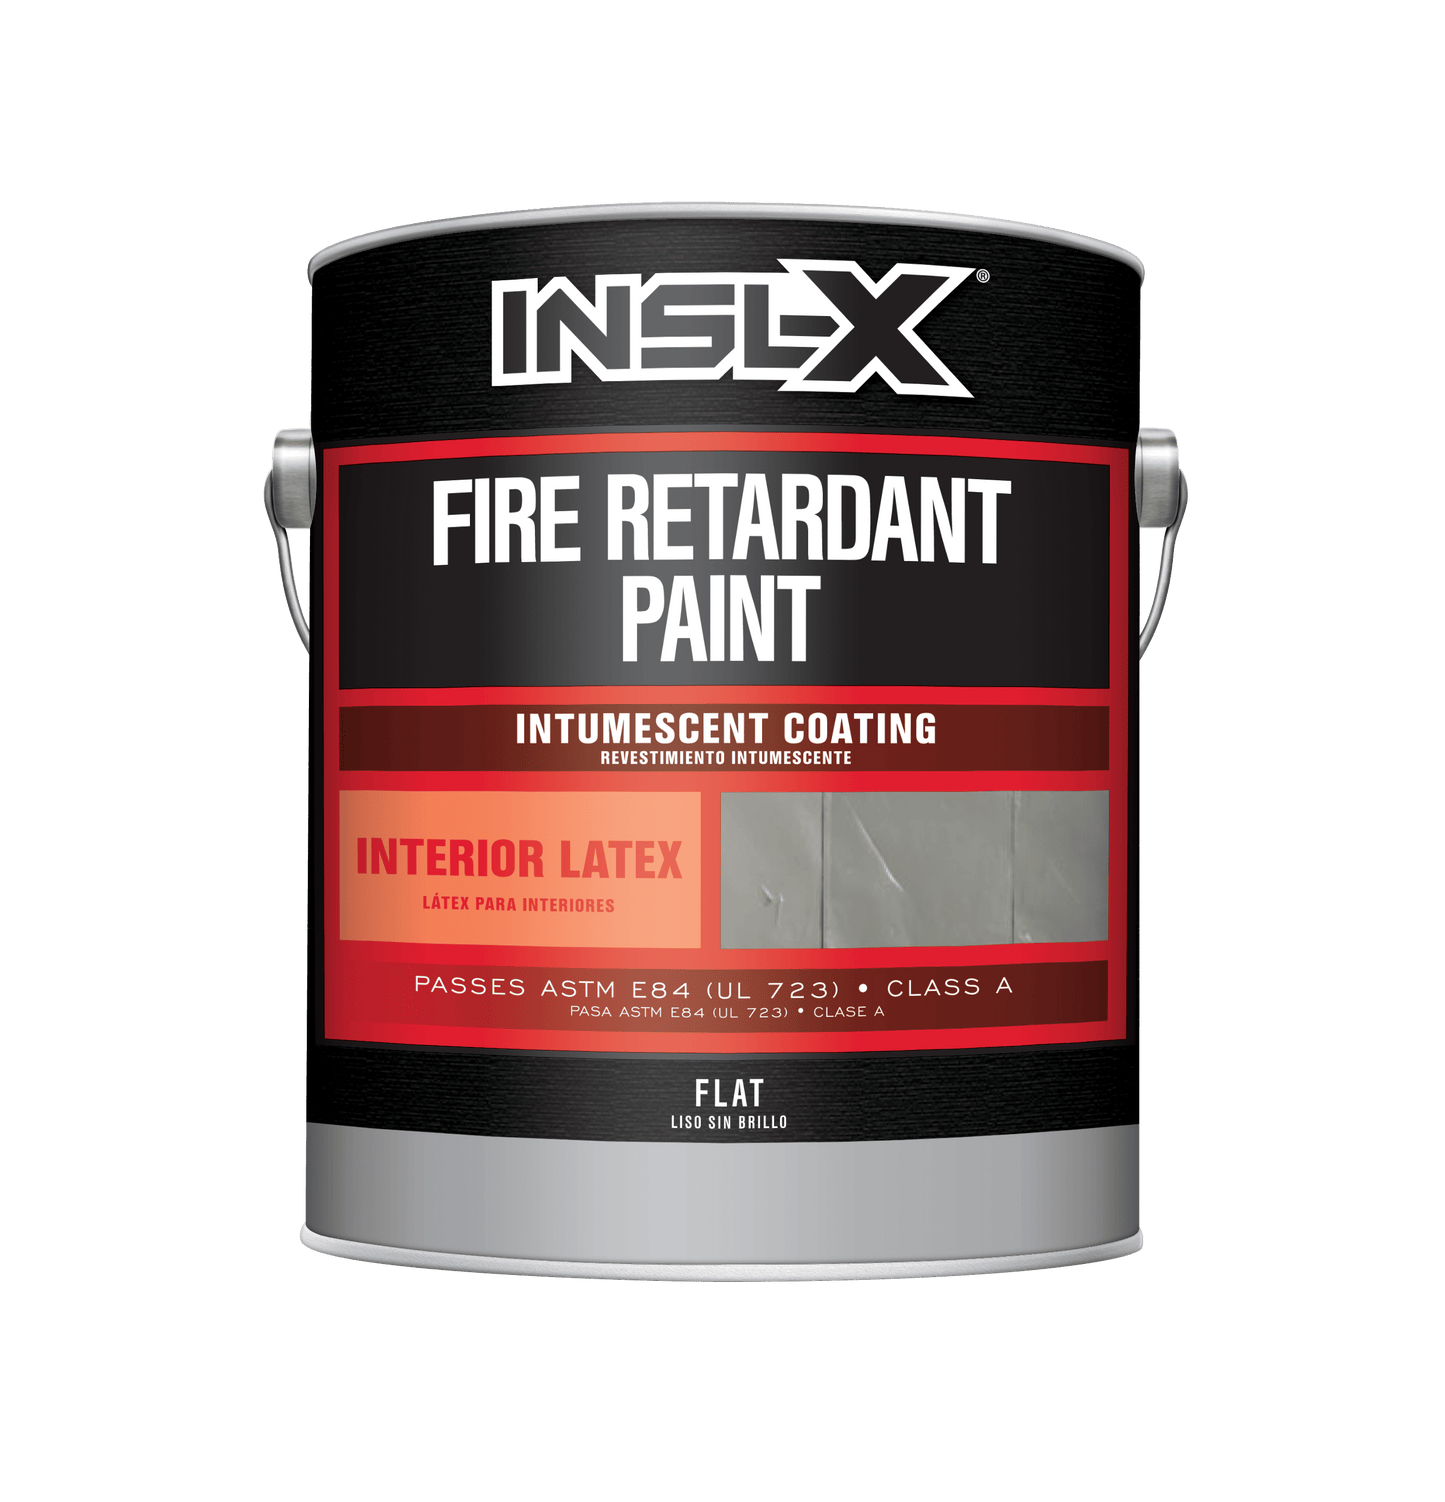 INSL-X Fire Retardant Paint